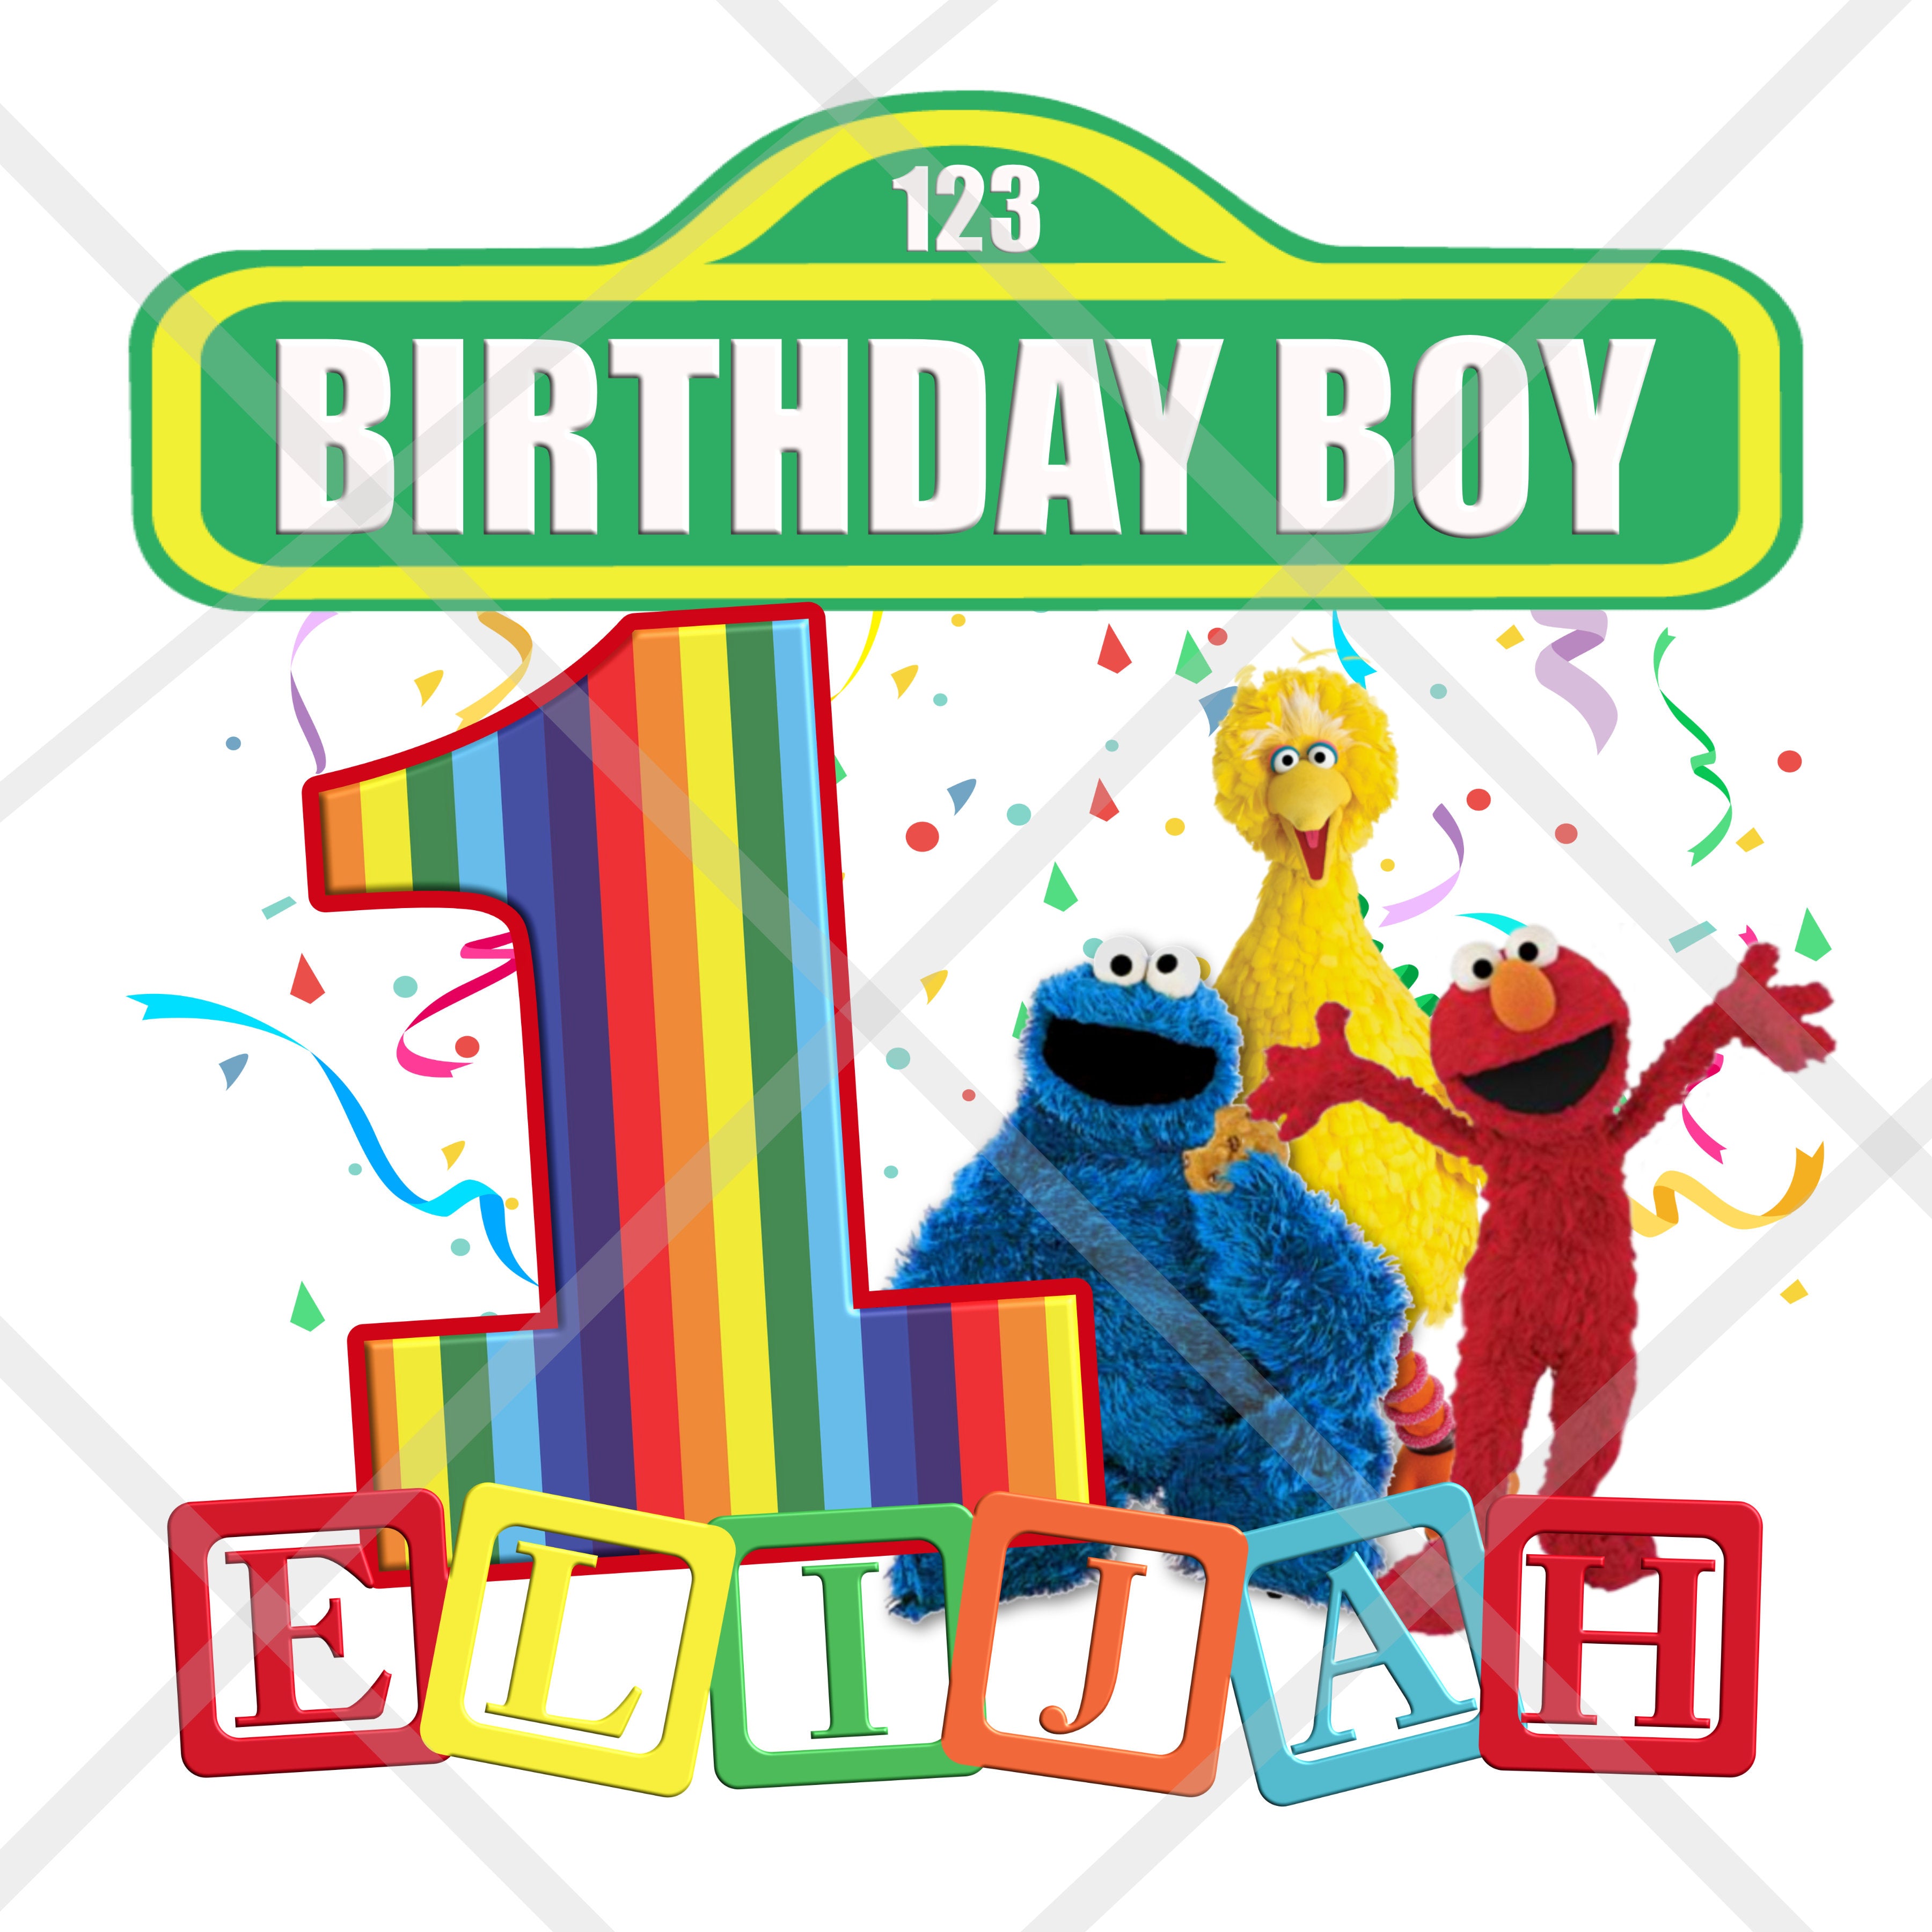 Download 1st Birthday Boy Sesame Street Elmo Cookie Monster Big Bird Png 300dpi Tab S Chic Boutique